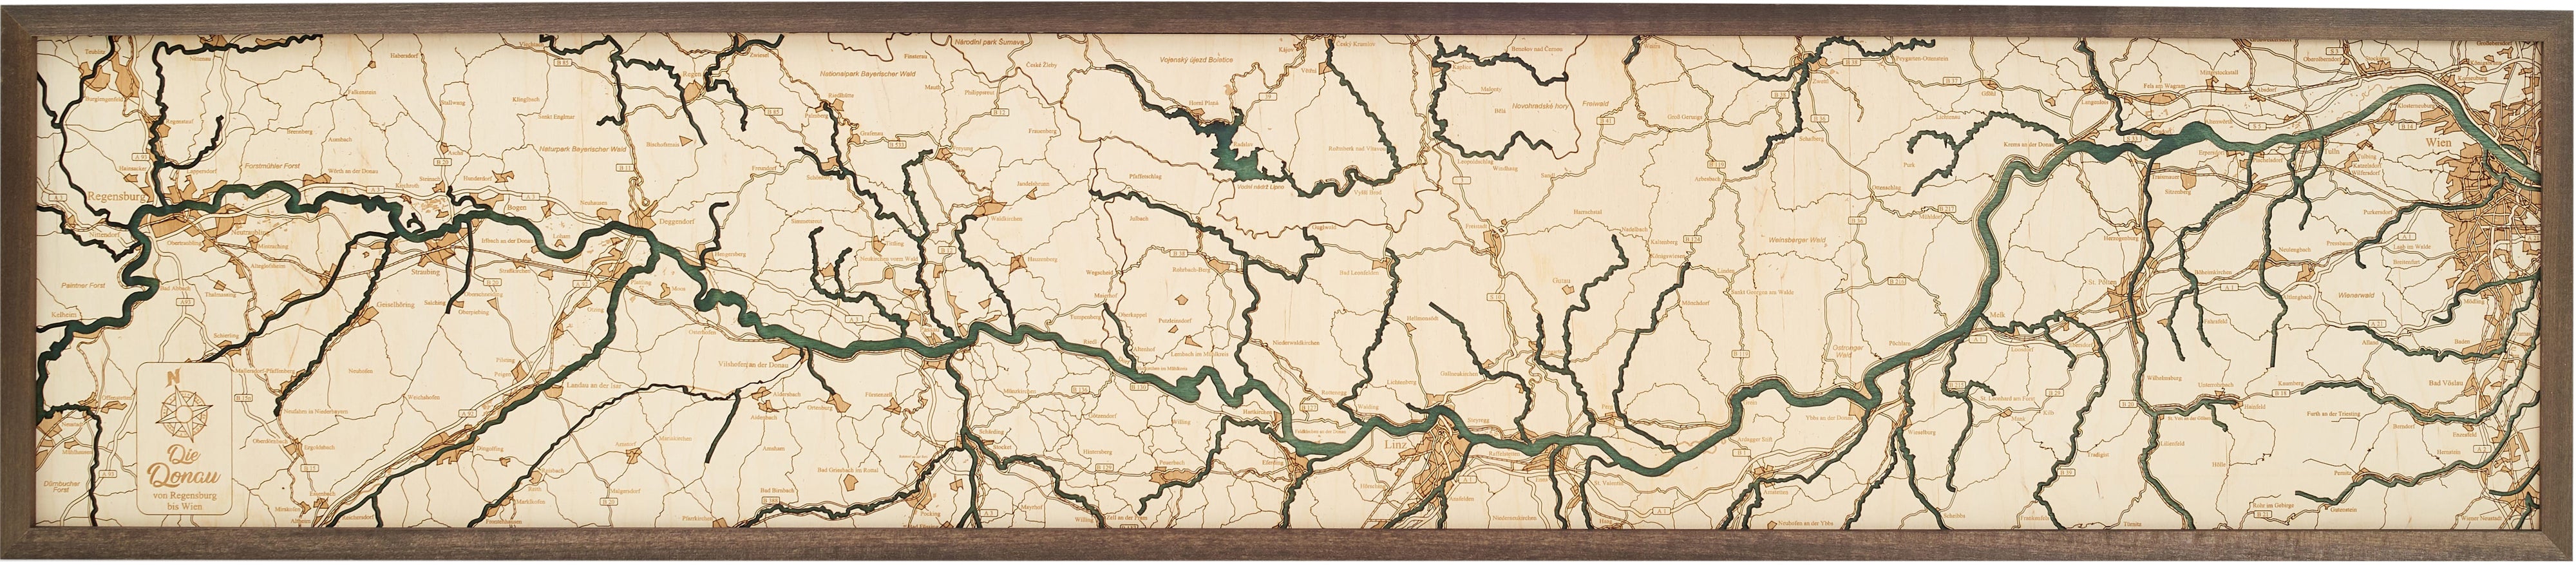 DANUBE 3D wooden wall map - version L 